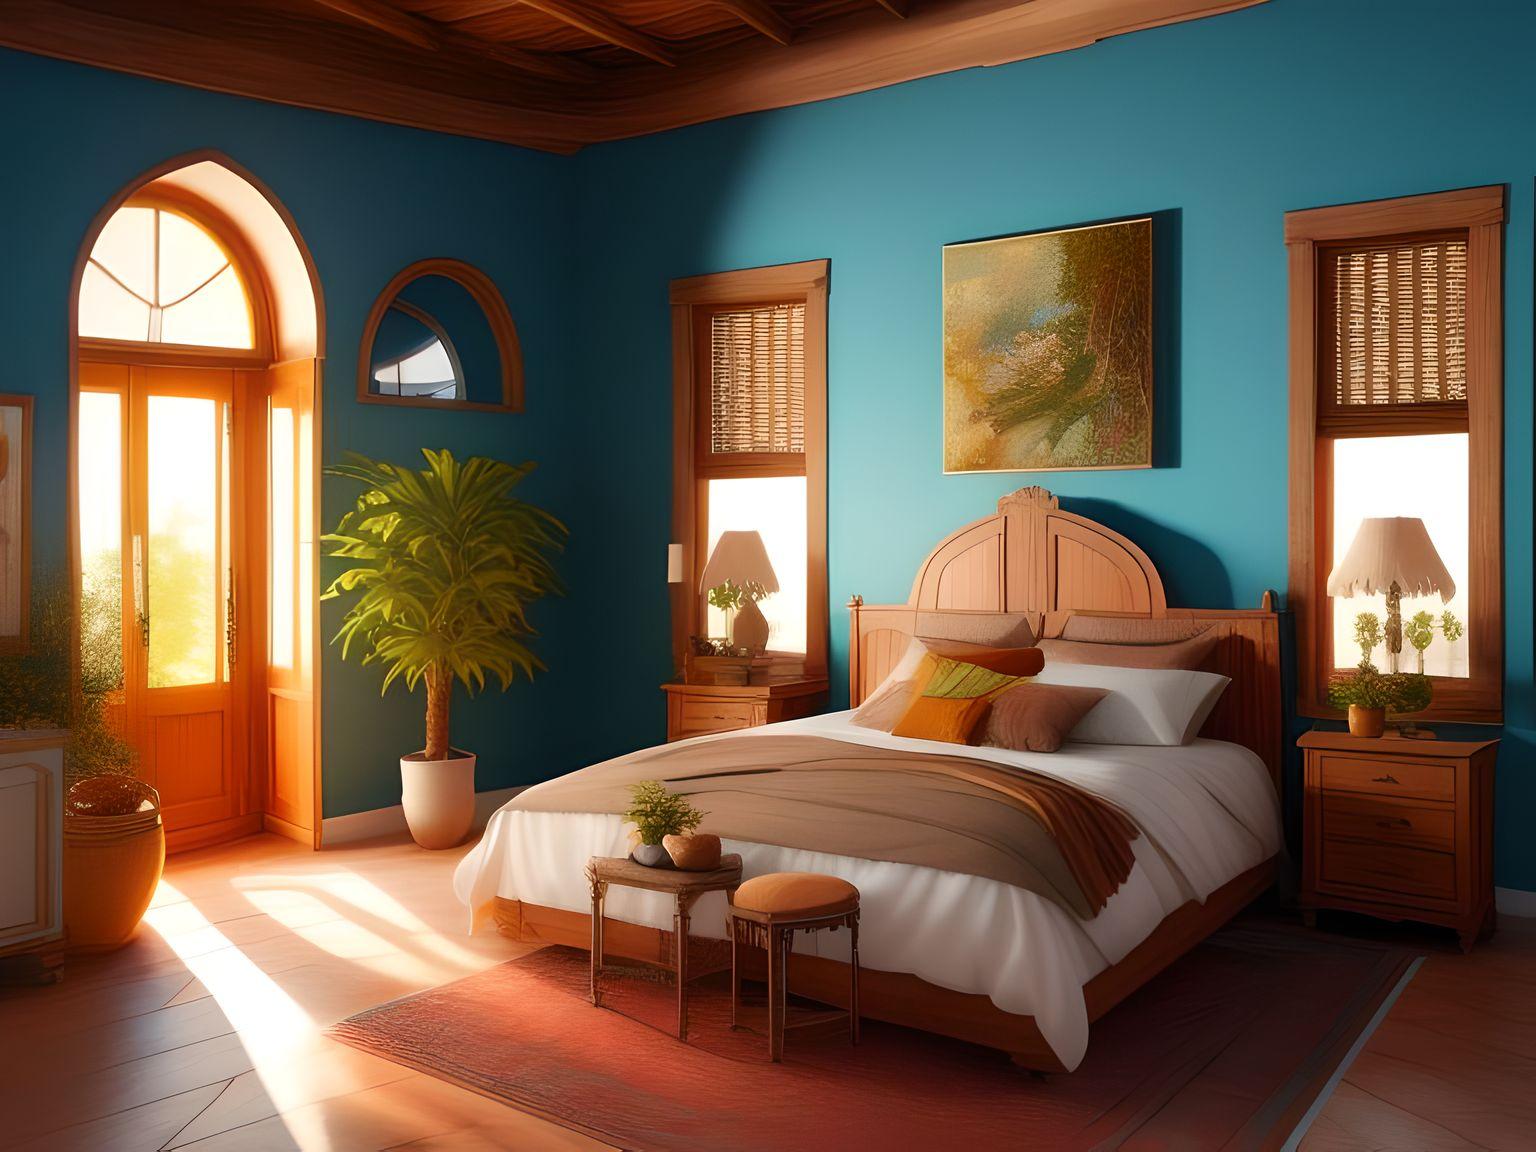 mediterranean style bedroom interior design